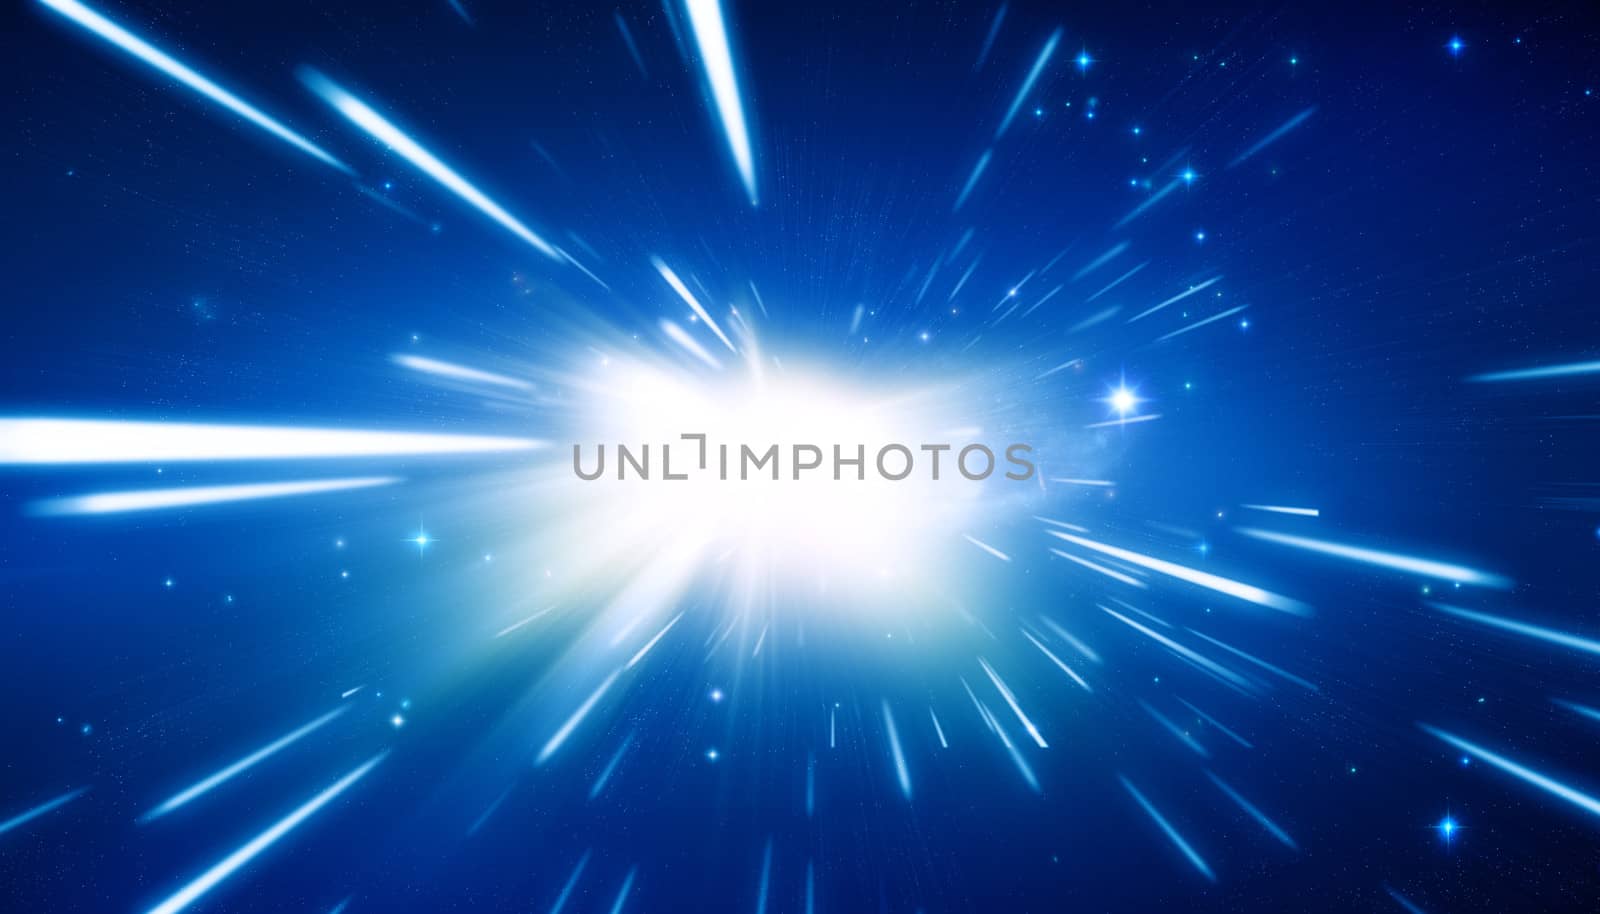 Big Bang - Universe Background by 123dartist